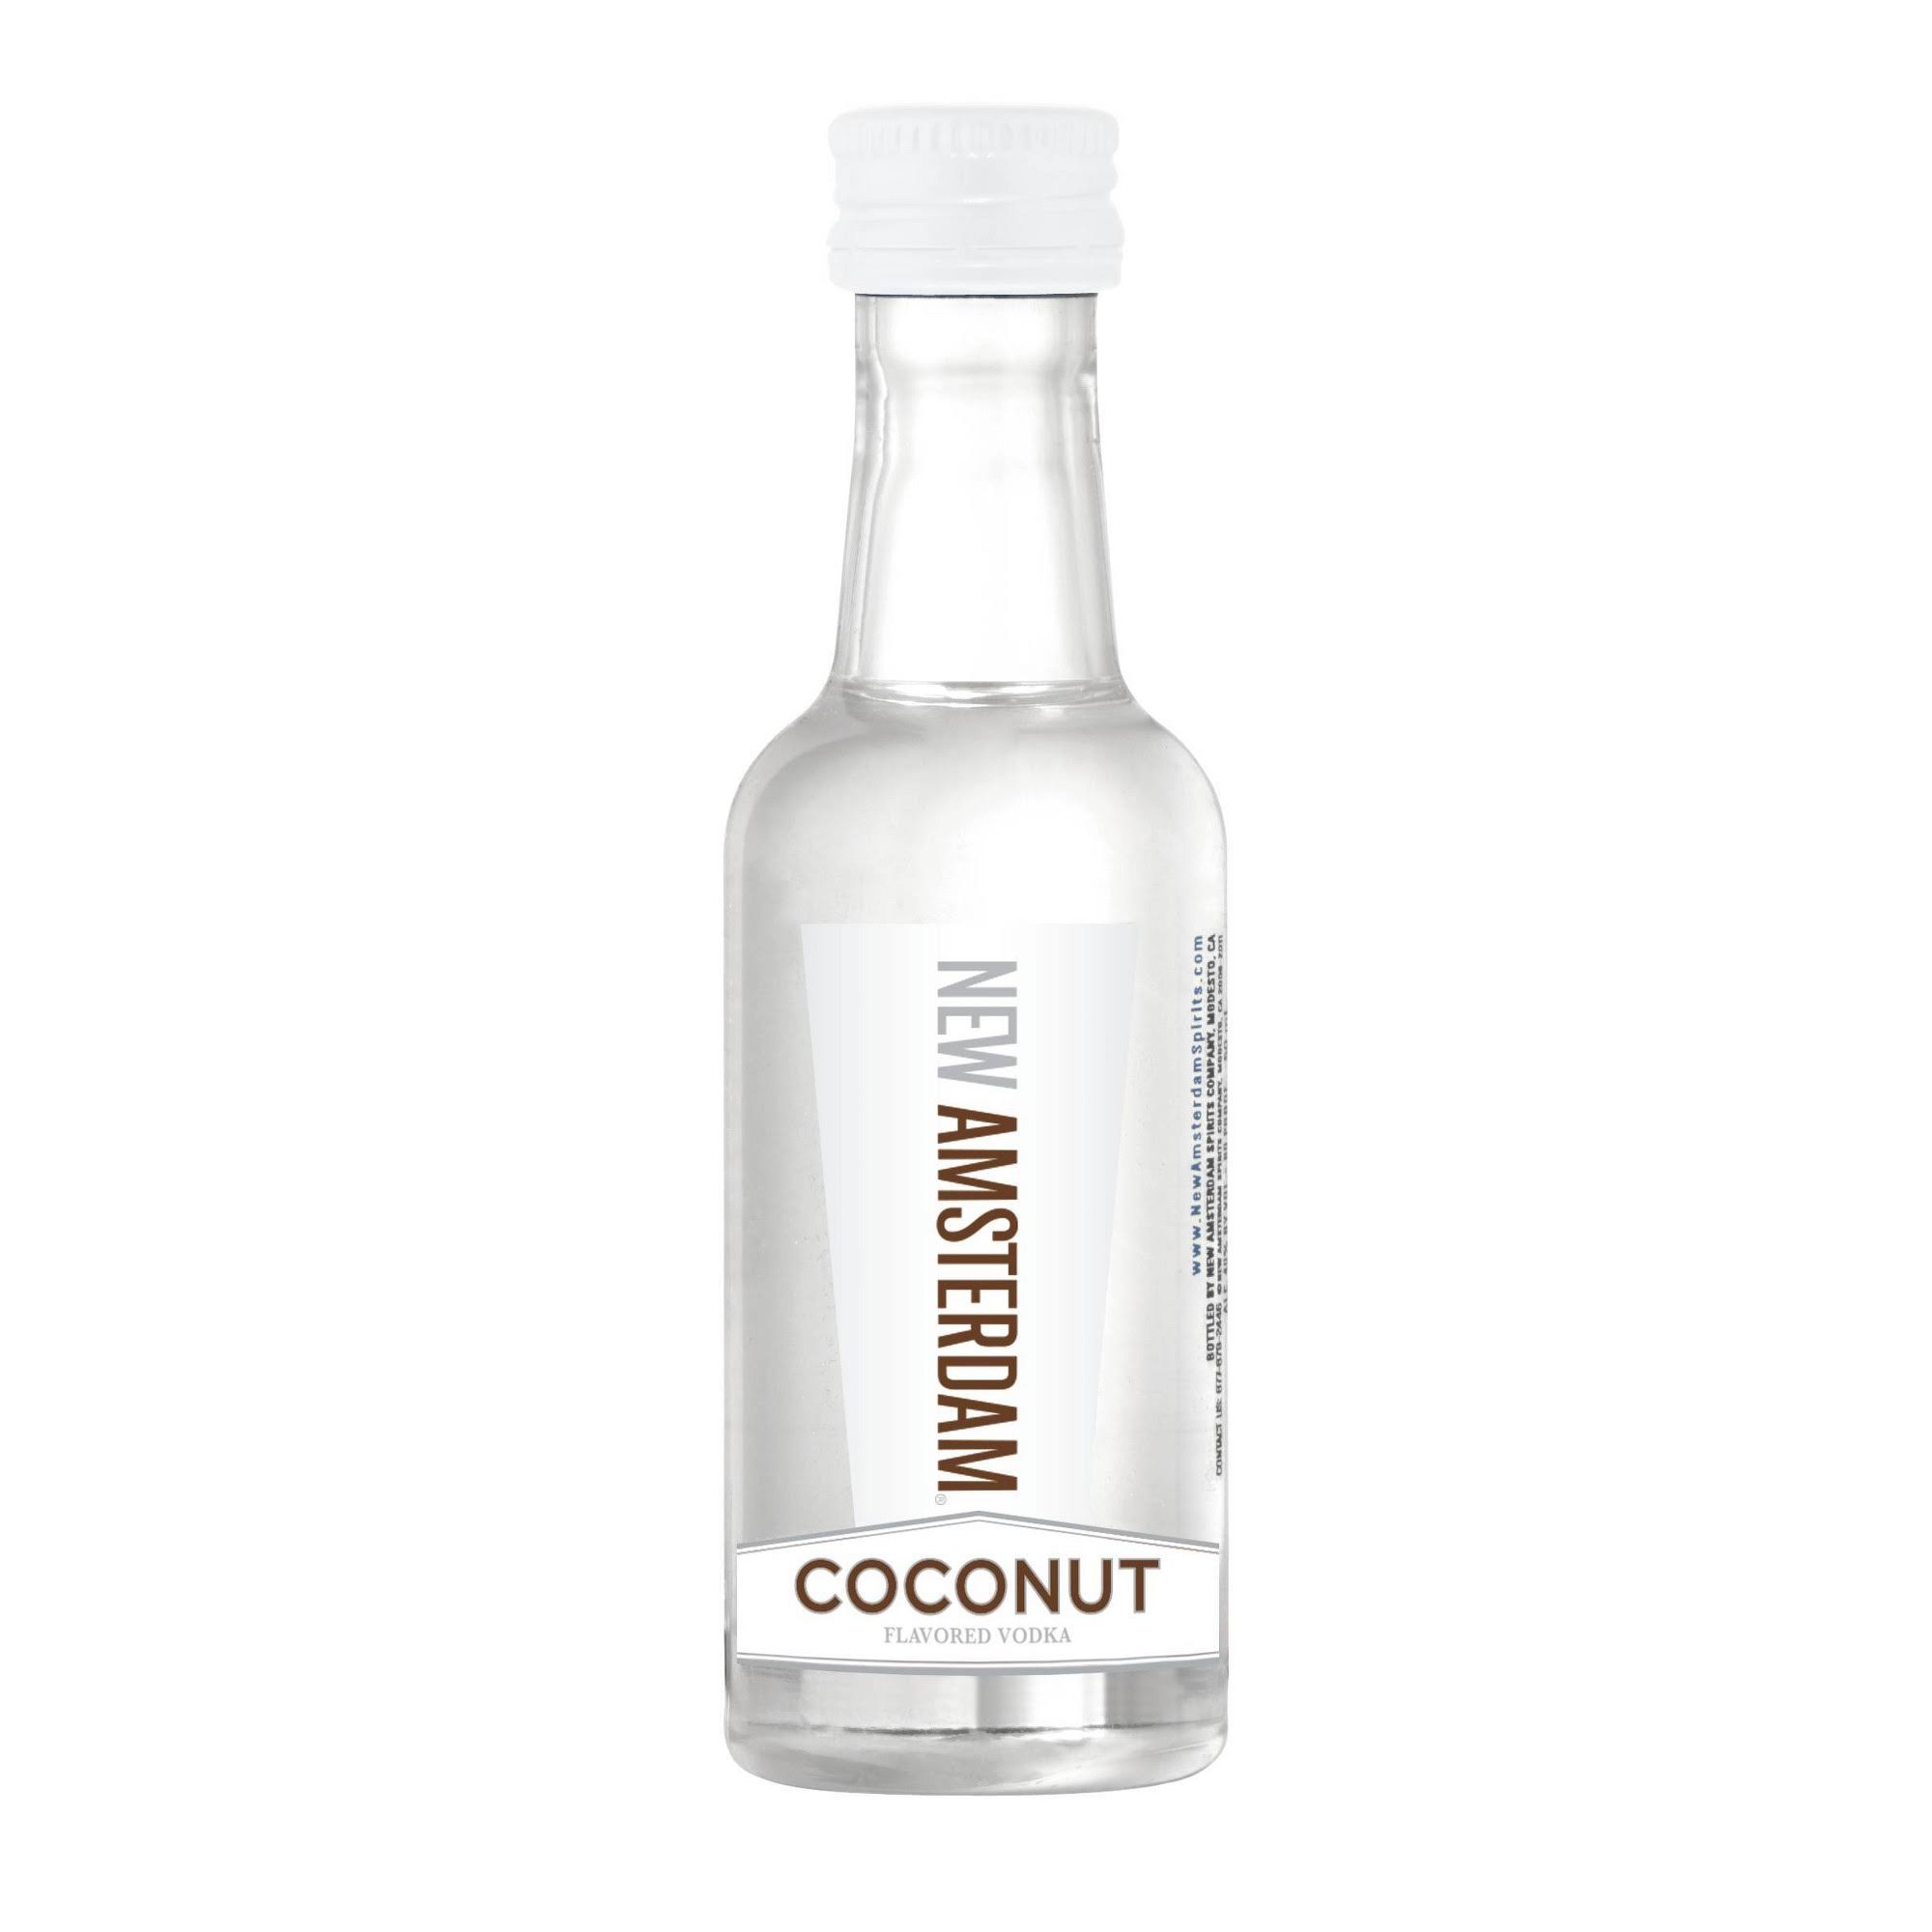 New Amsterdam Vodka Coconut 50ml